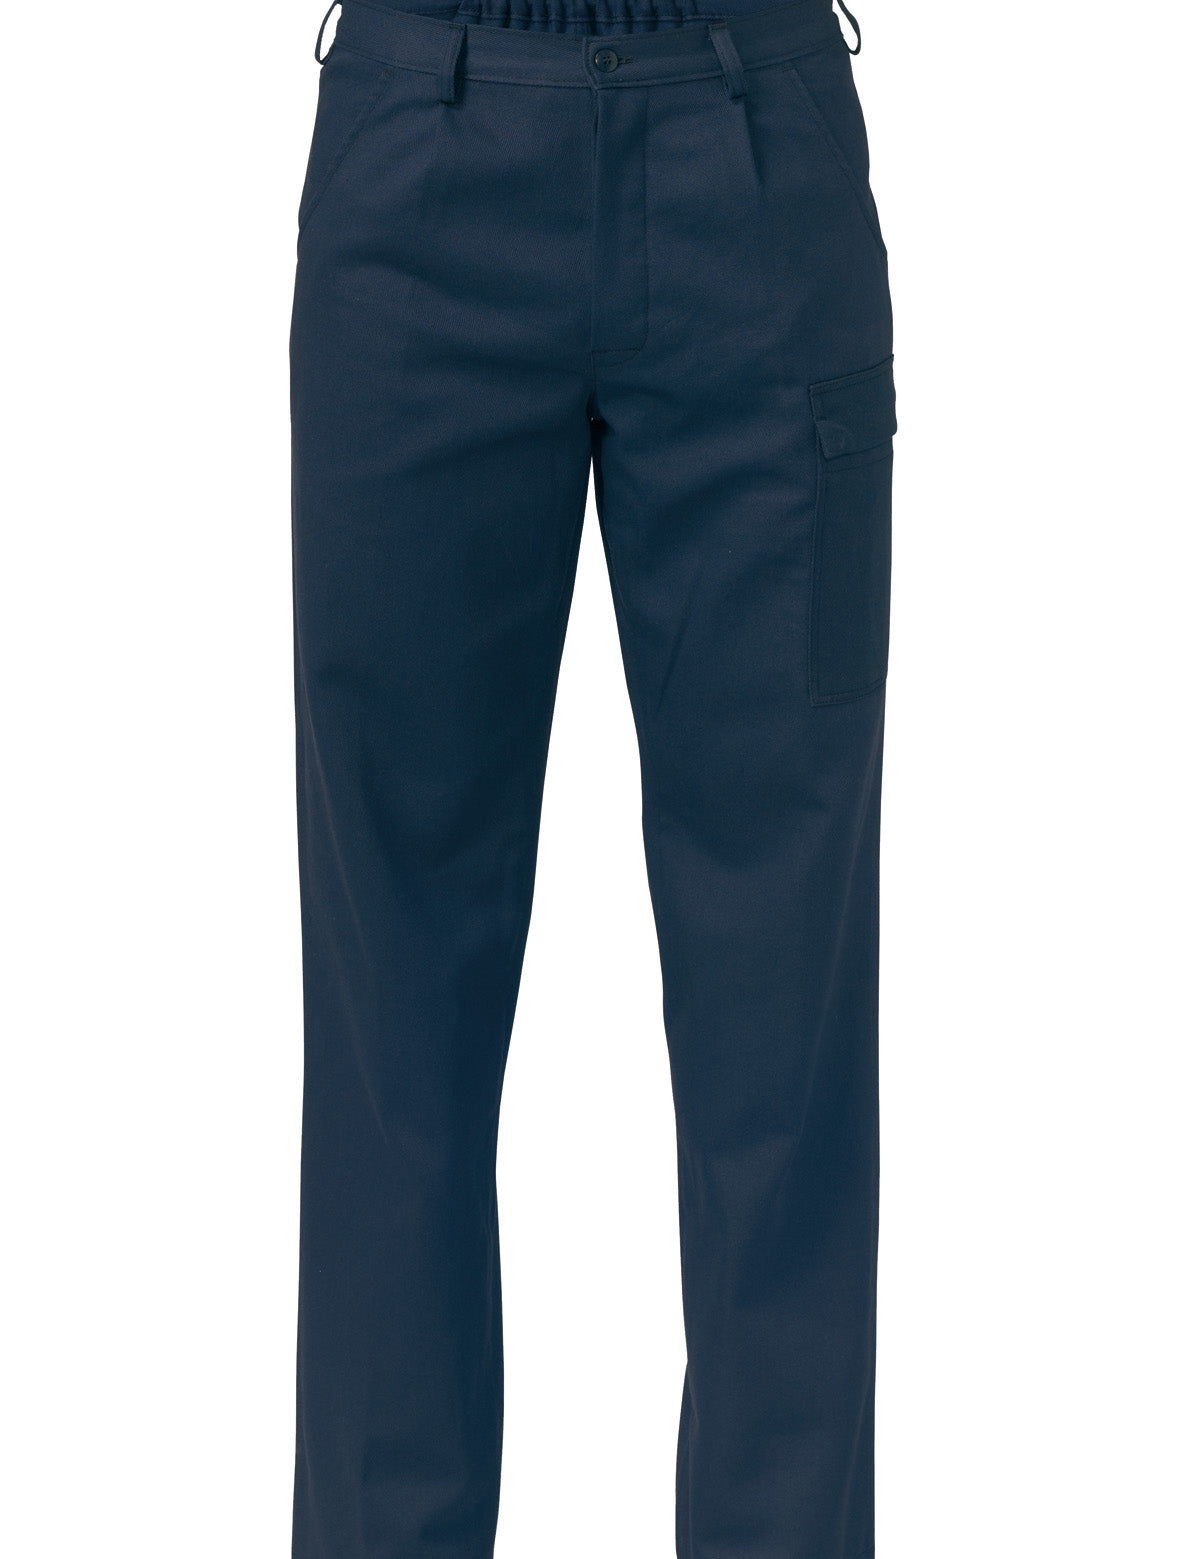 Pantaloni  Siggi New Extra Abbigliamento Professionale art.14PA0736